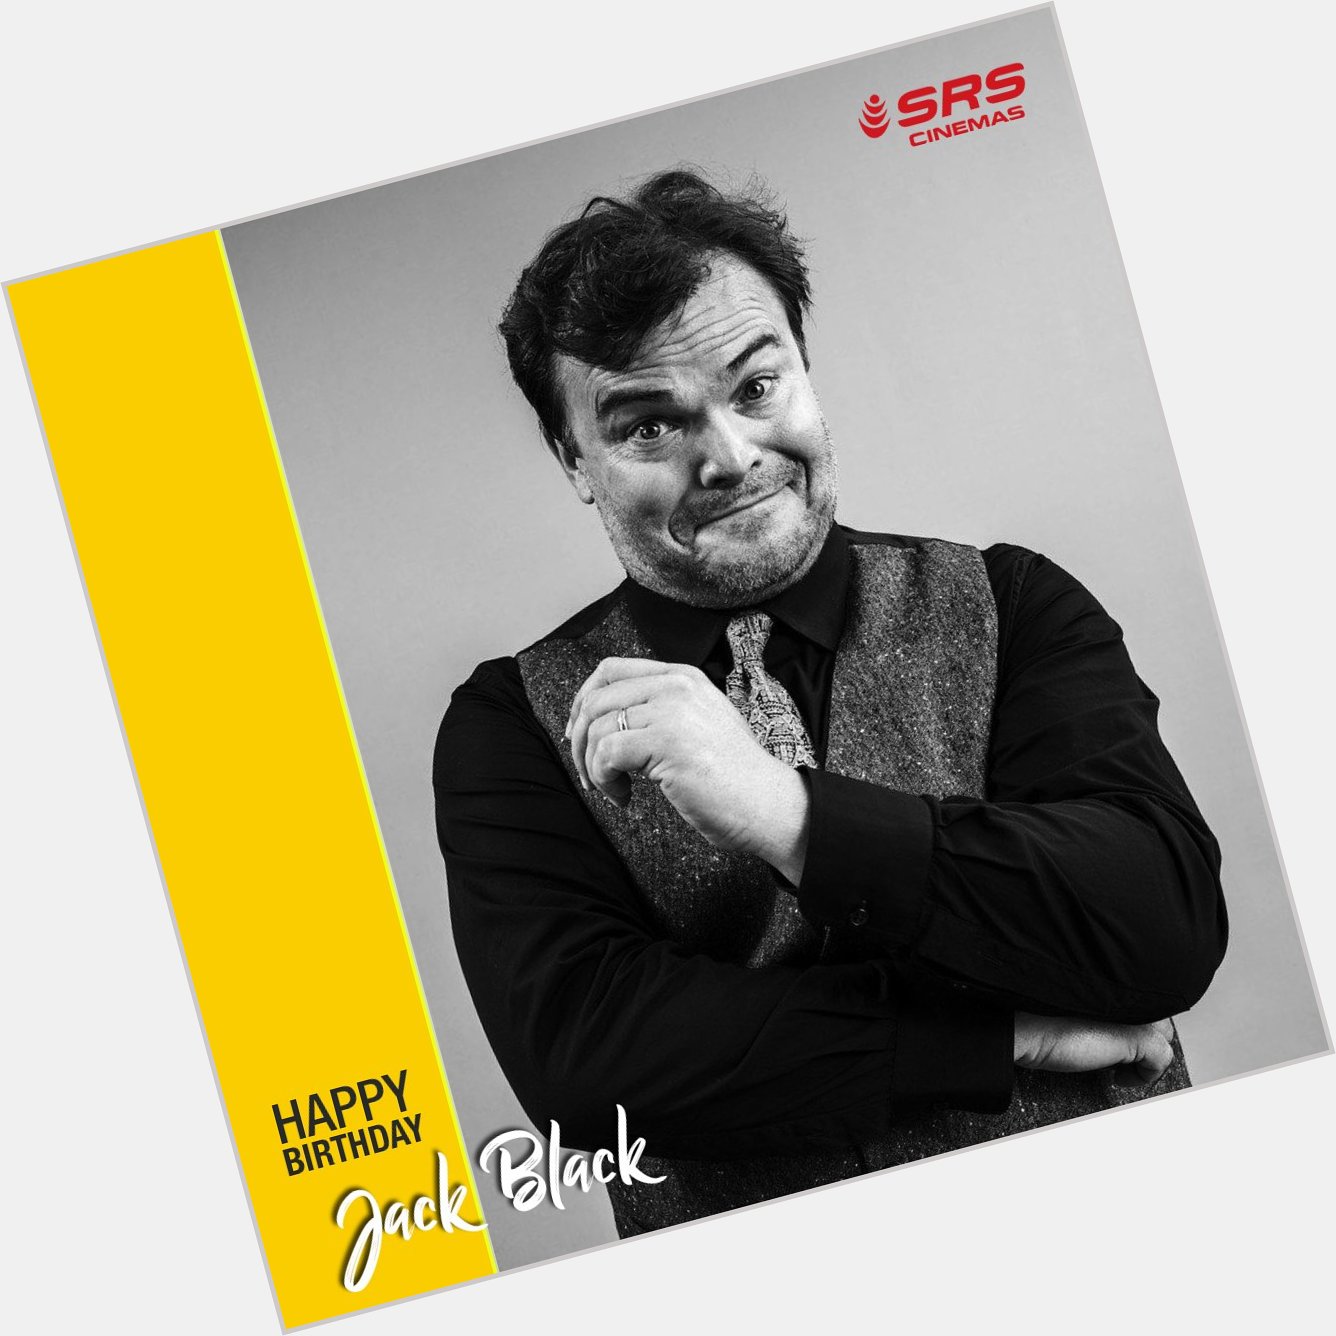 Wishing Jack Black a very happy birthday! 